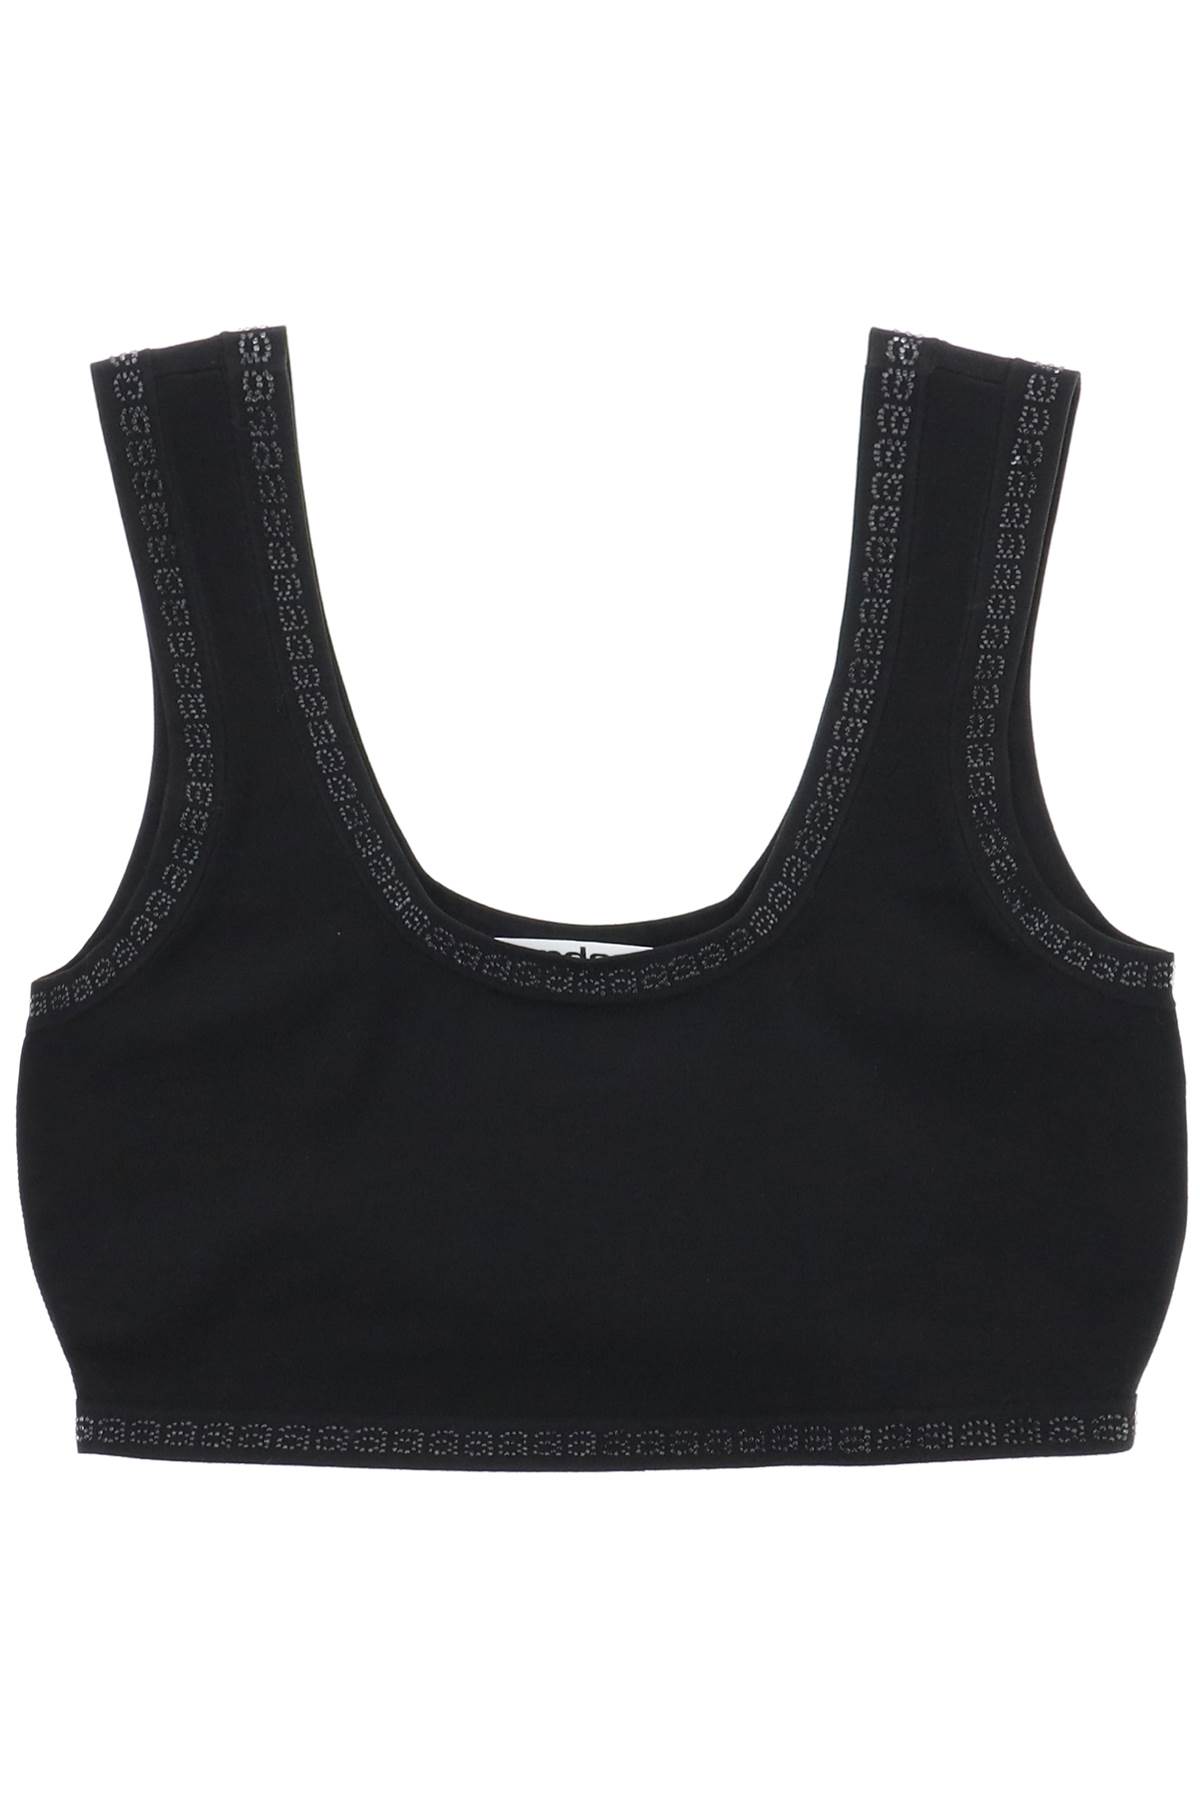 Alexander Wang• Sports Bra Black  Black sports bra, Fashion trends,  Clothes design